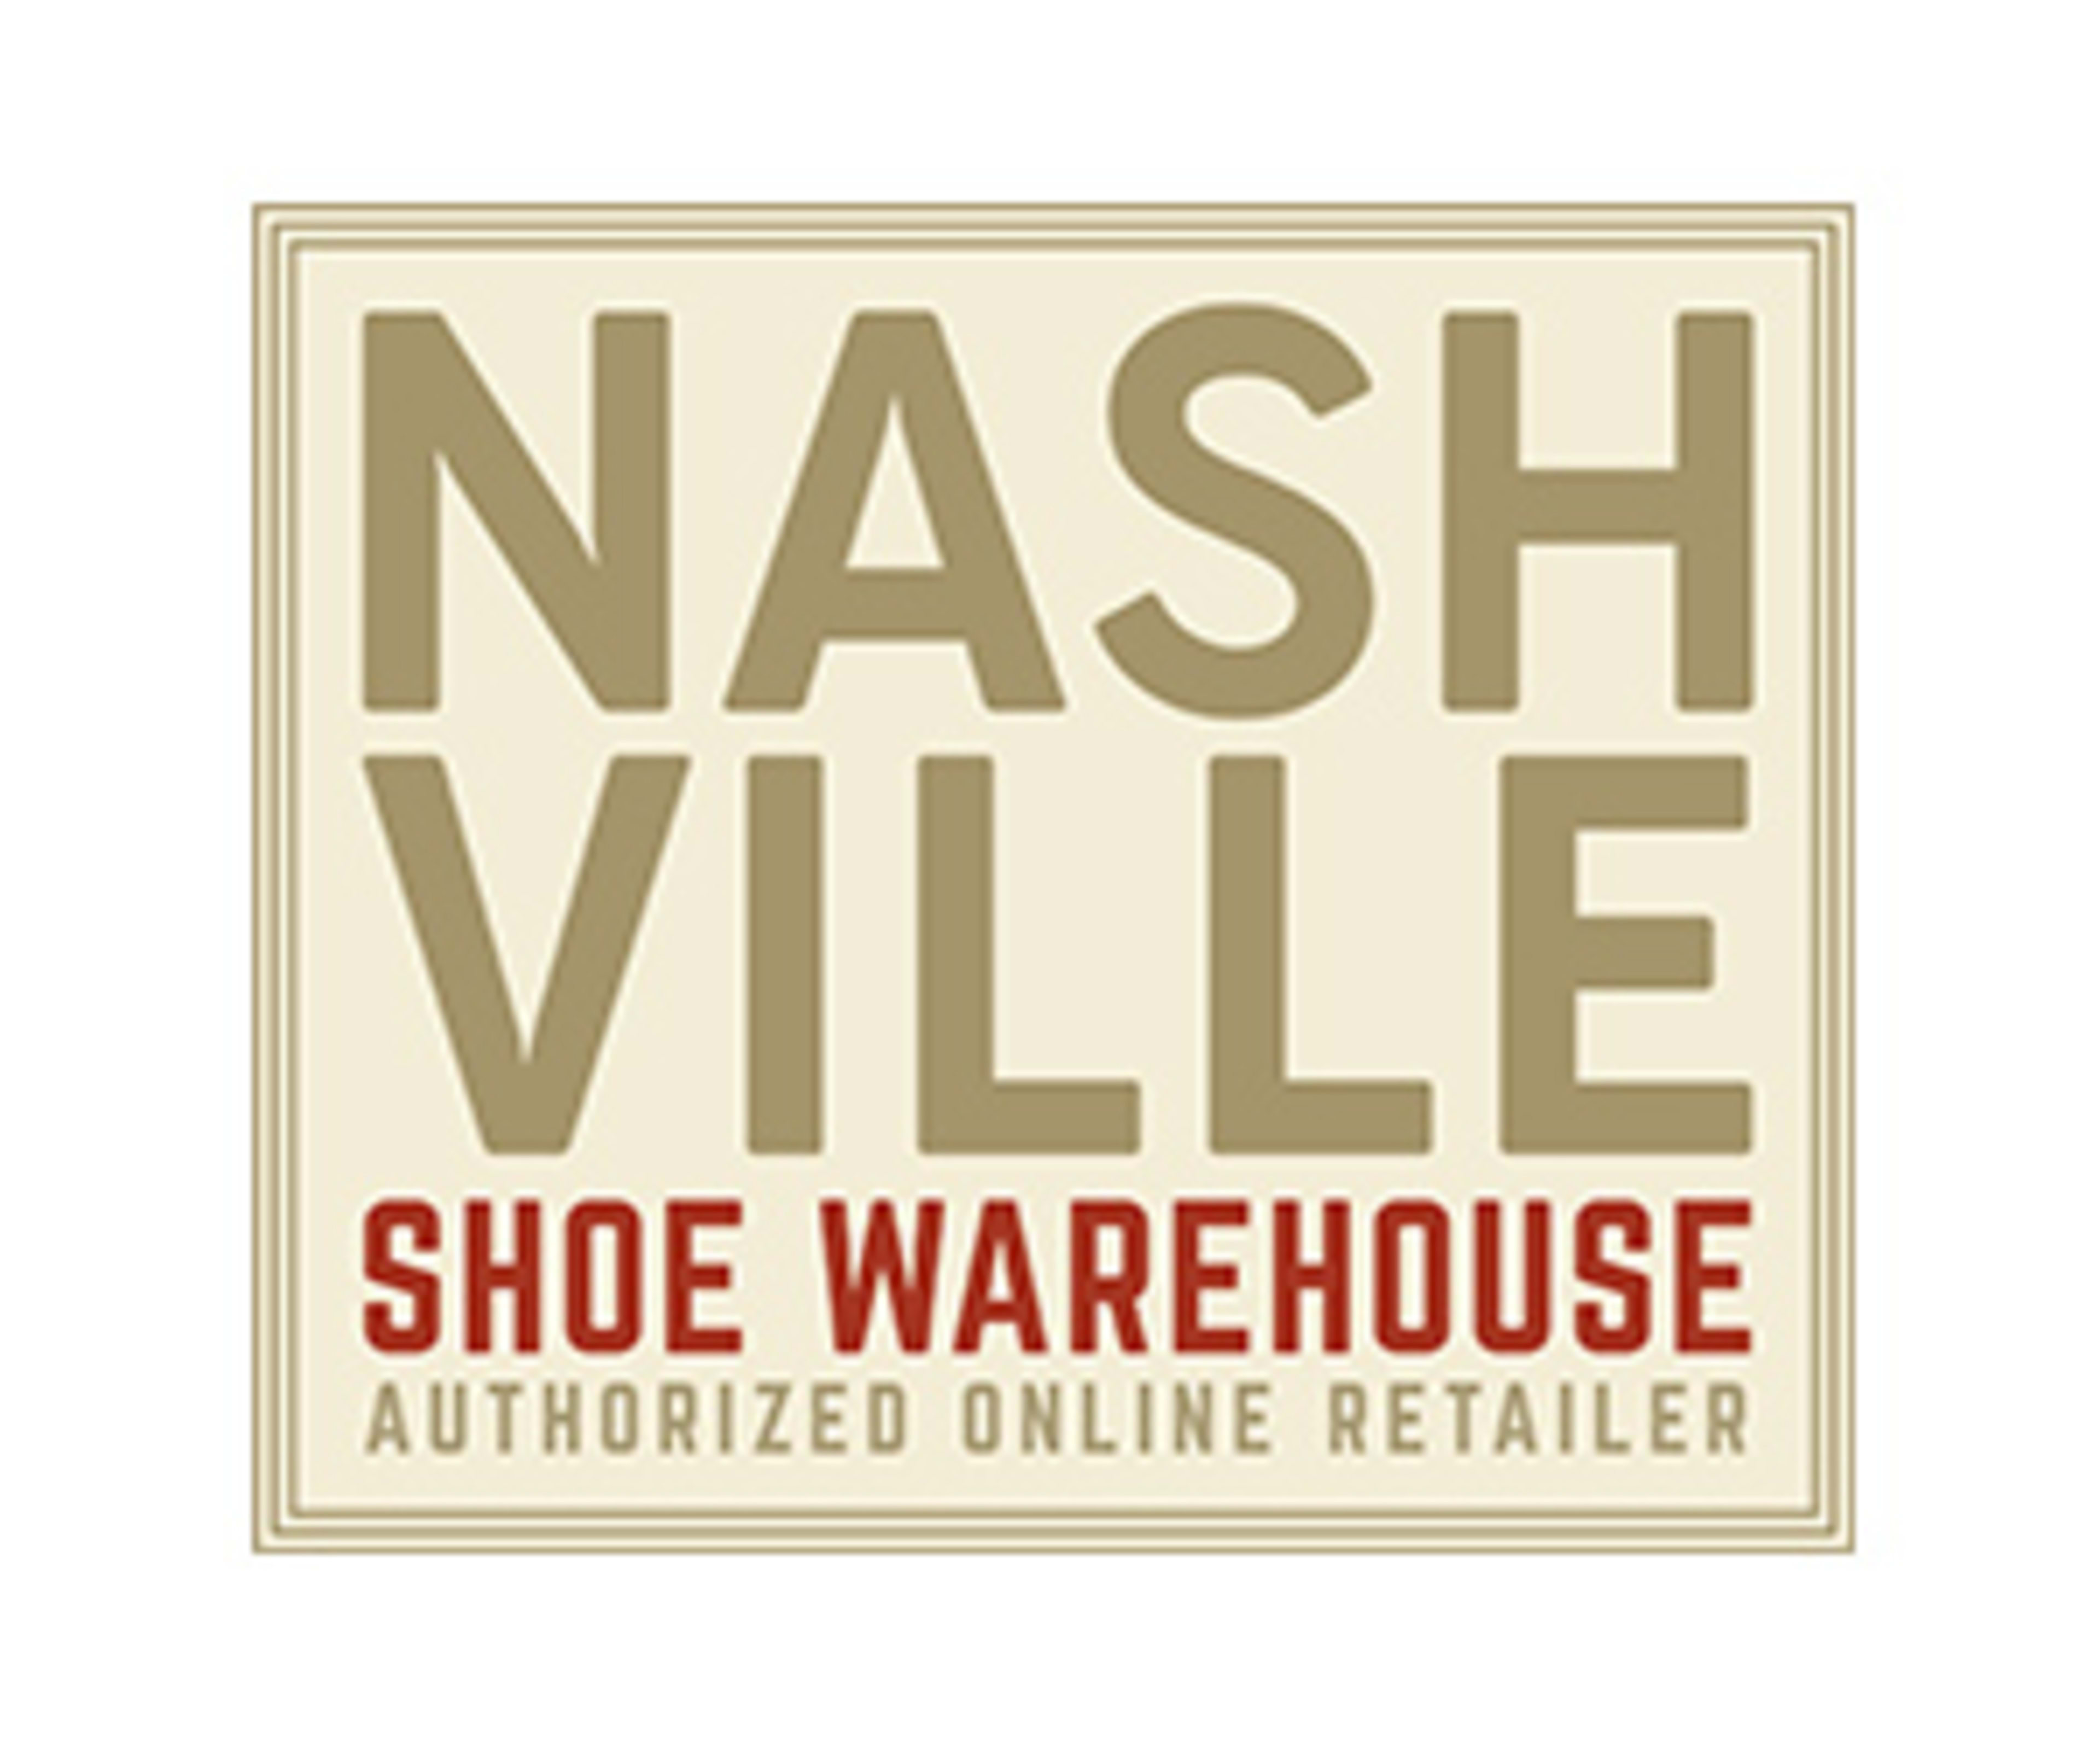 Nashville Shoe Warehouse Code